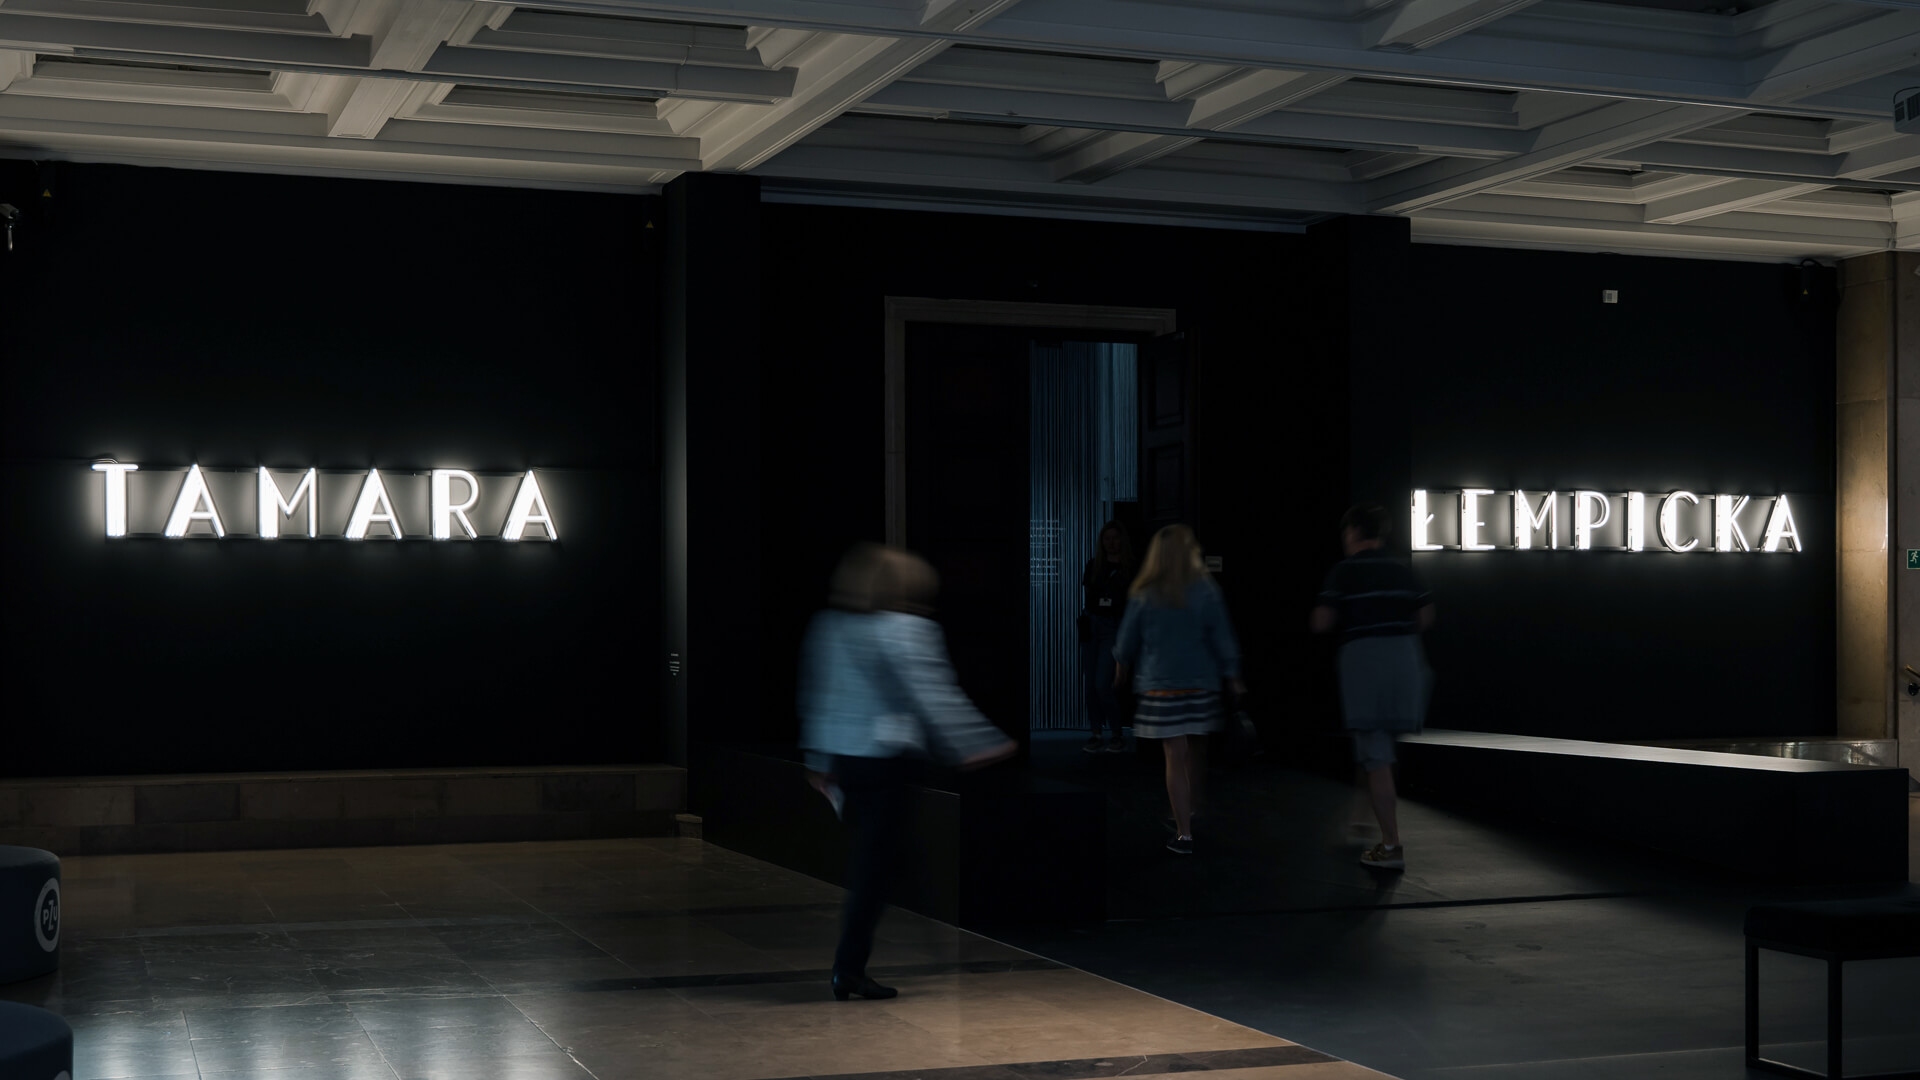 Néon Tamara Lempicka - Lettres rétro au néon en blanc